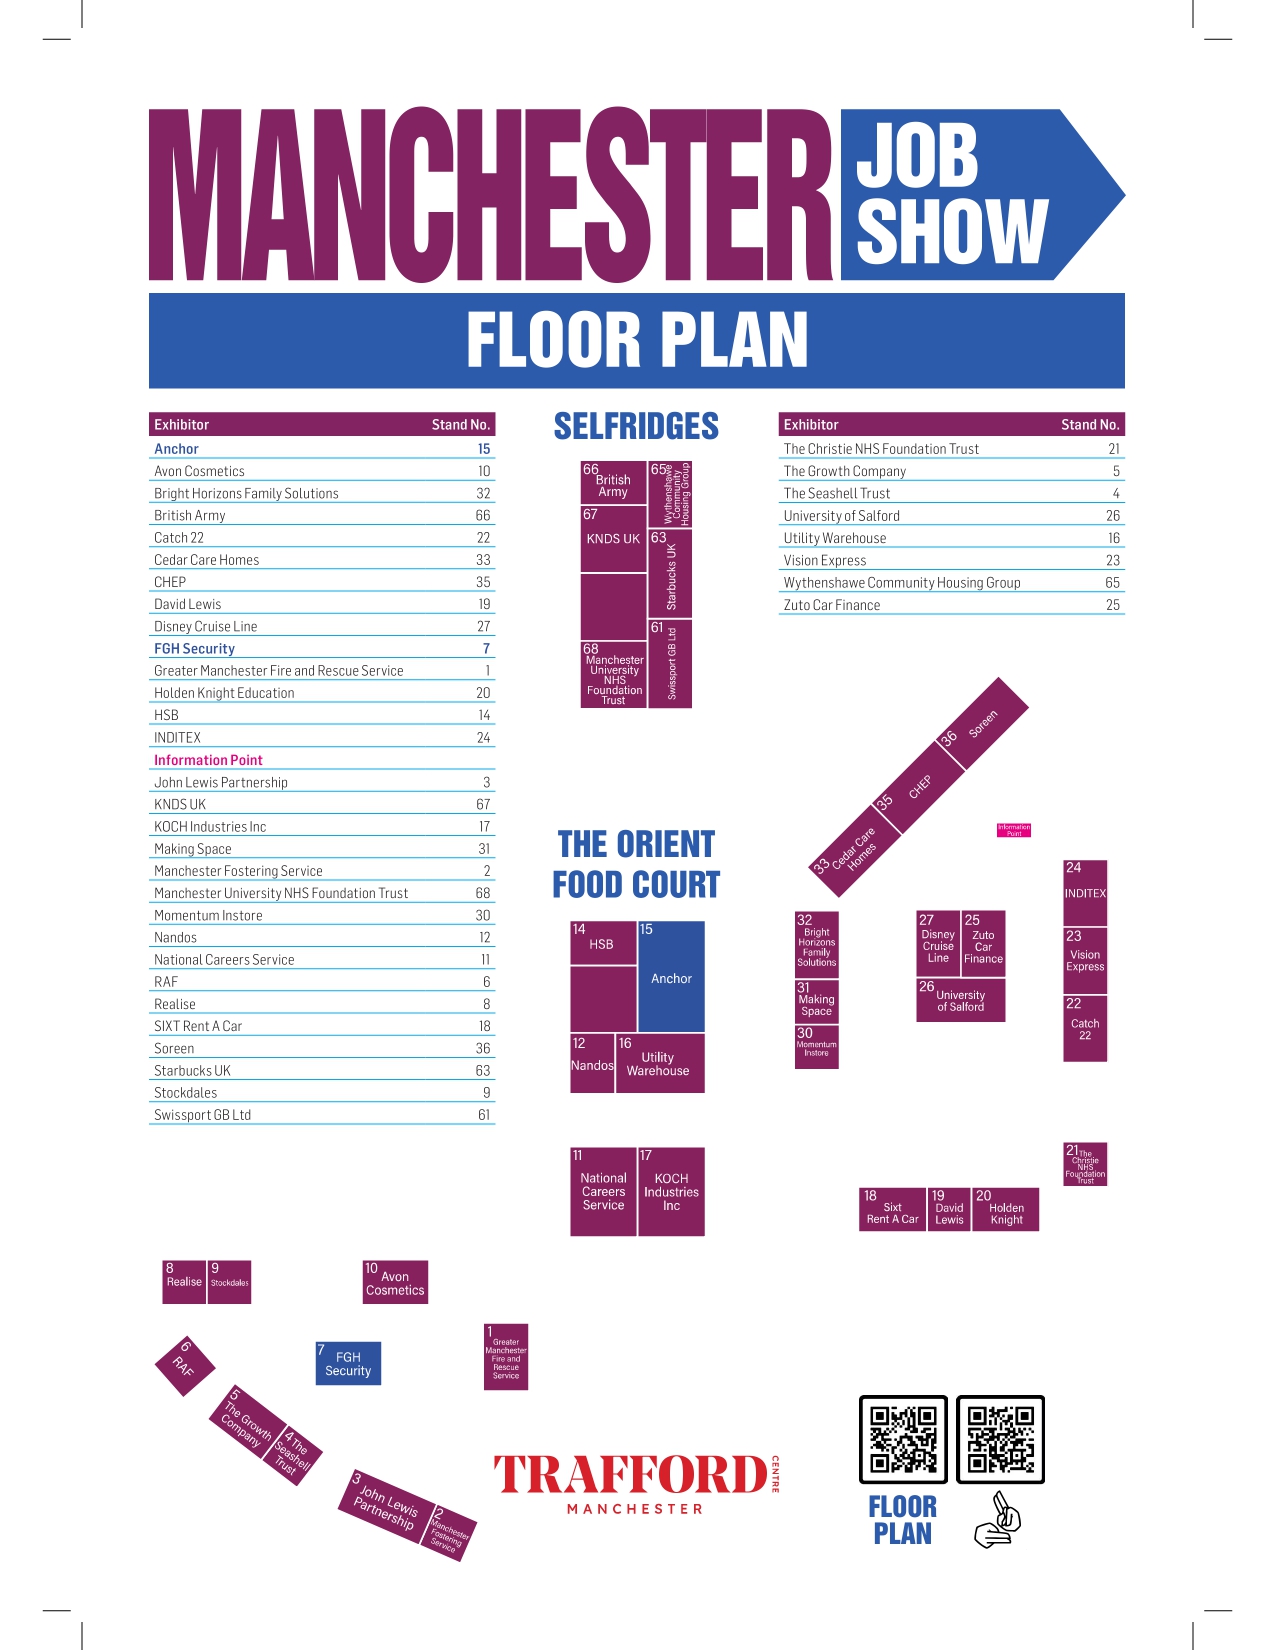 Manchester Job Show Floor Plan